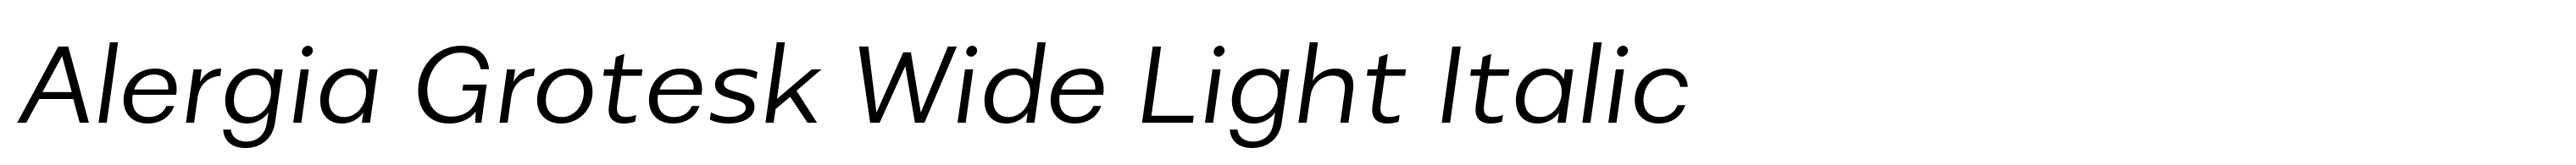 Alergia Grotesk Wide Light Italic